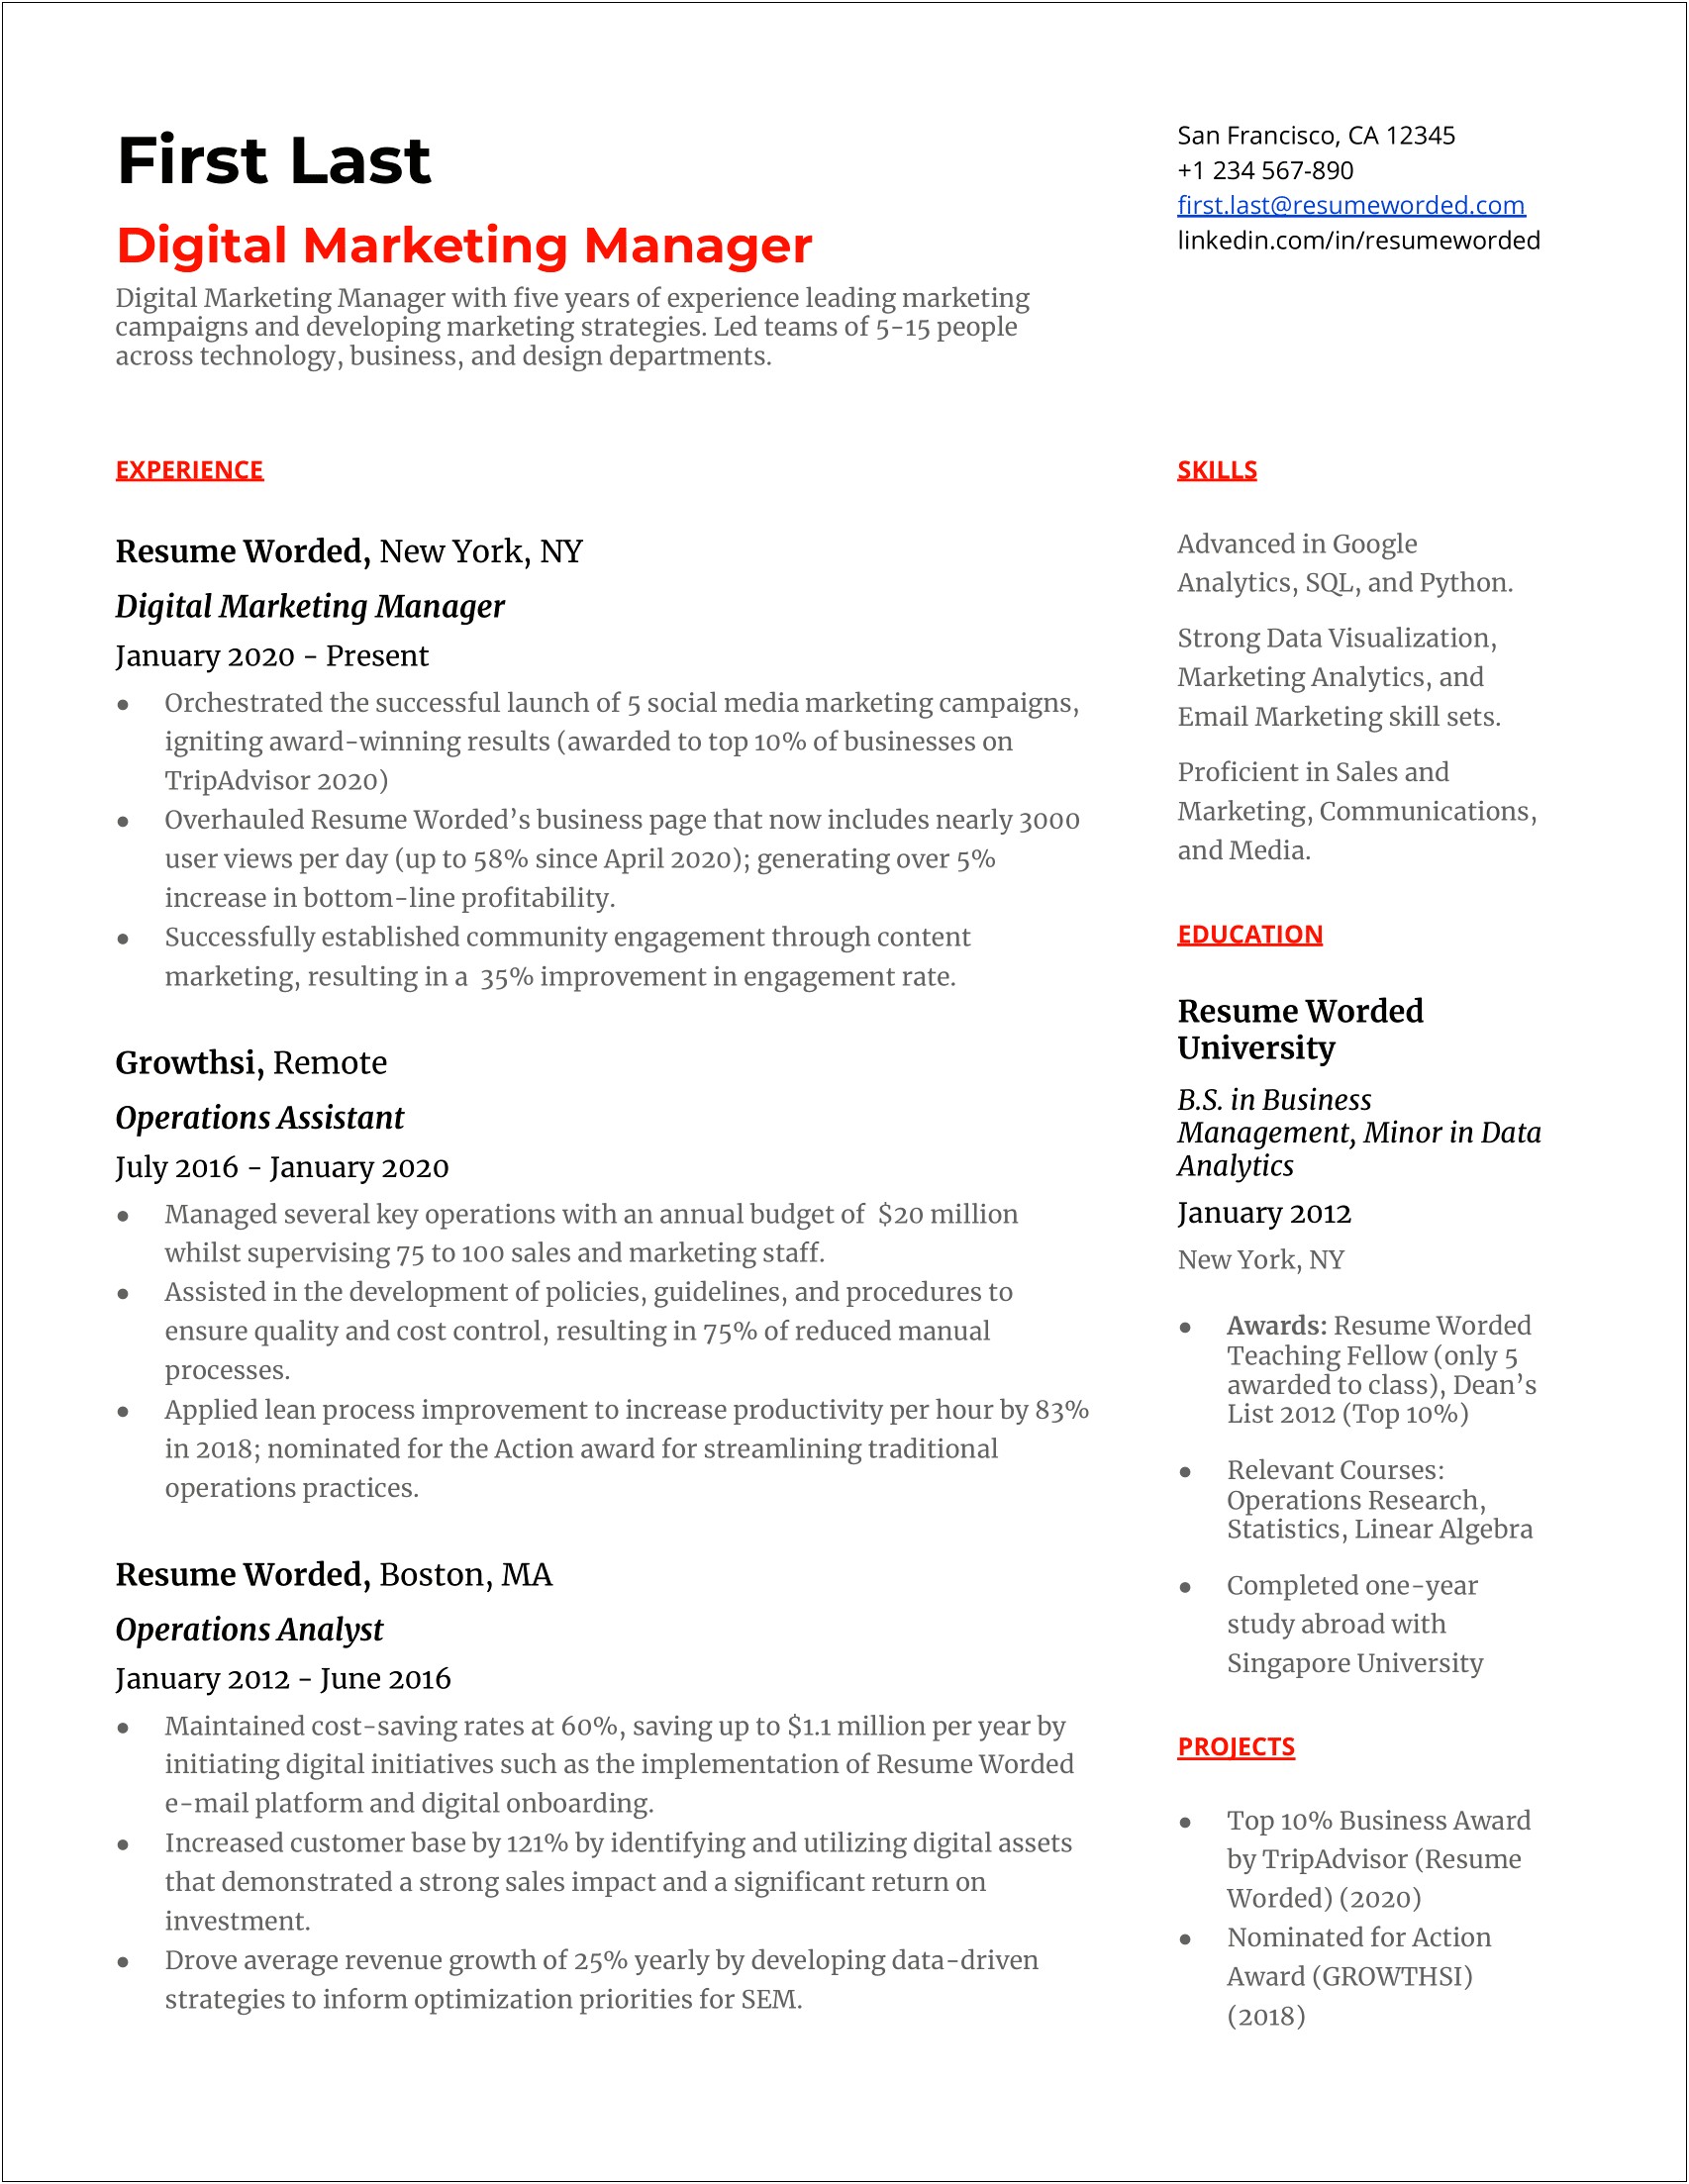 Marketing Manager Jobs Descriptions Resume